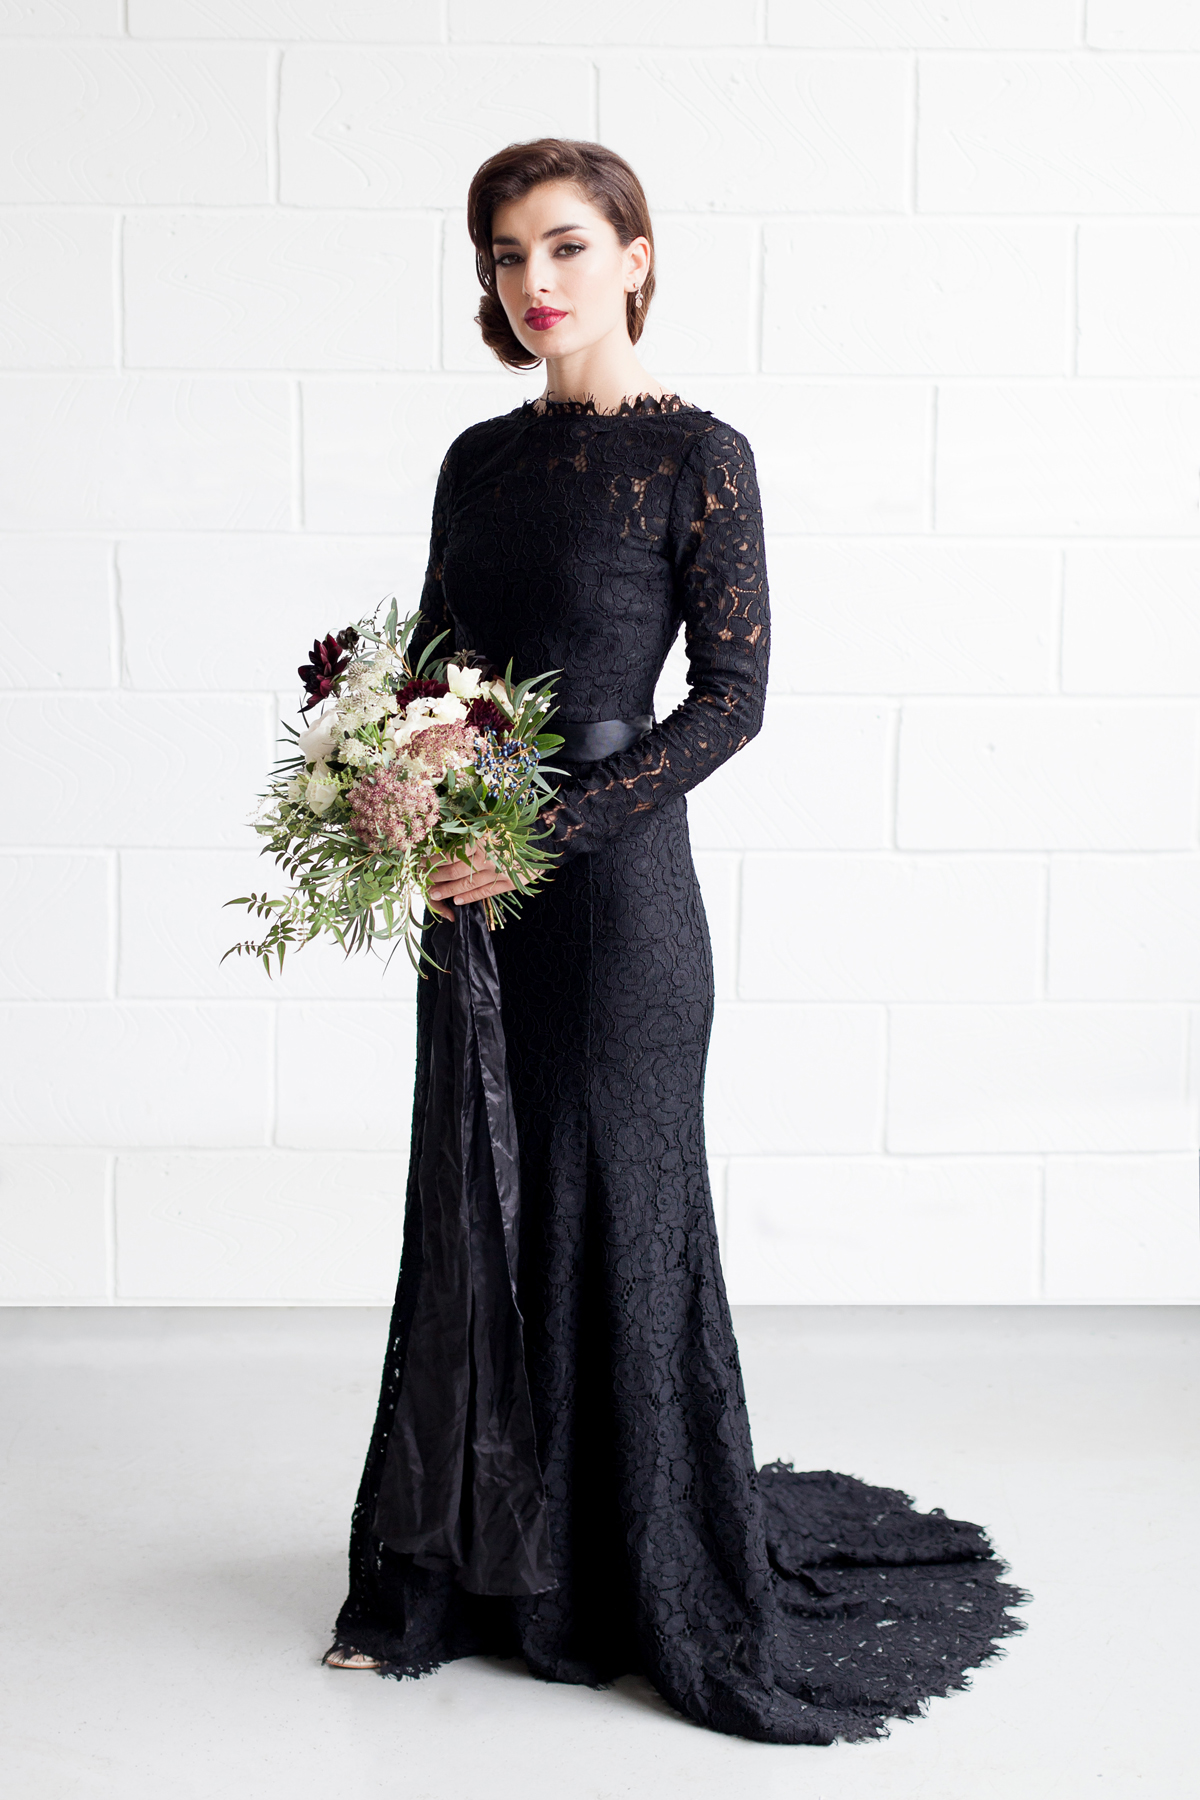 Black Lace Bridesmaid Dress - Industrial Warehouse Wedding -- The Overwhelmed Bride - Wedding Blog 